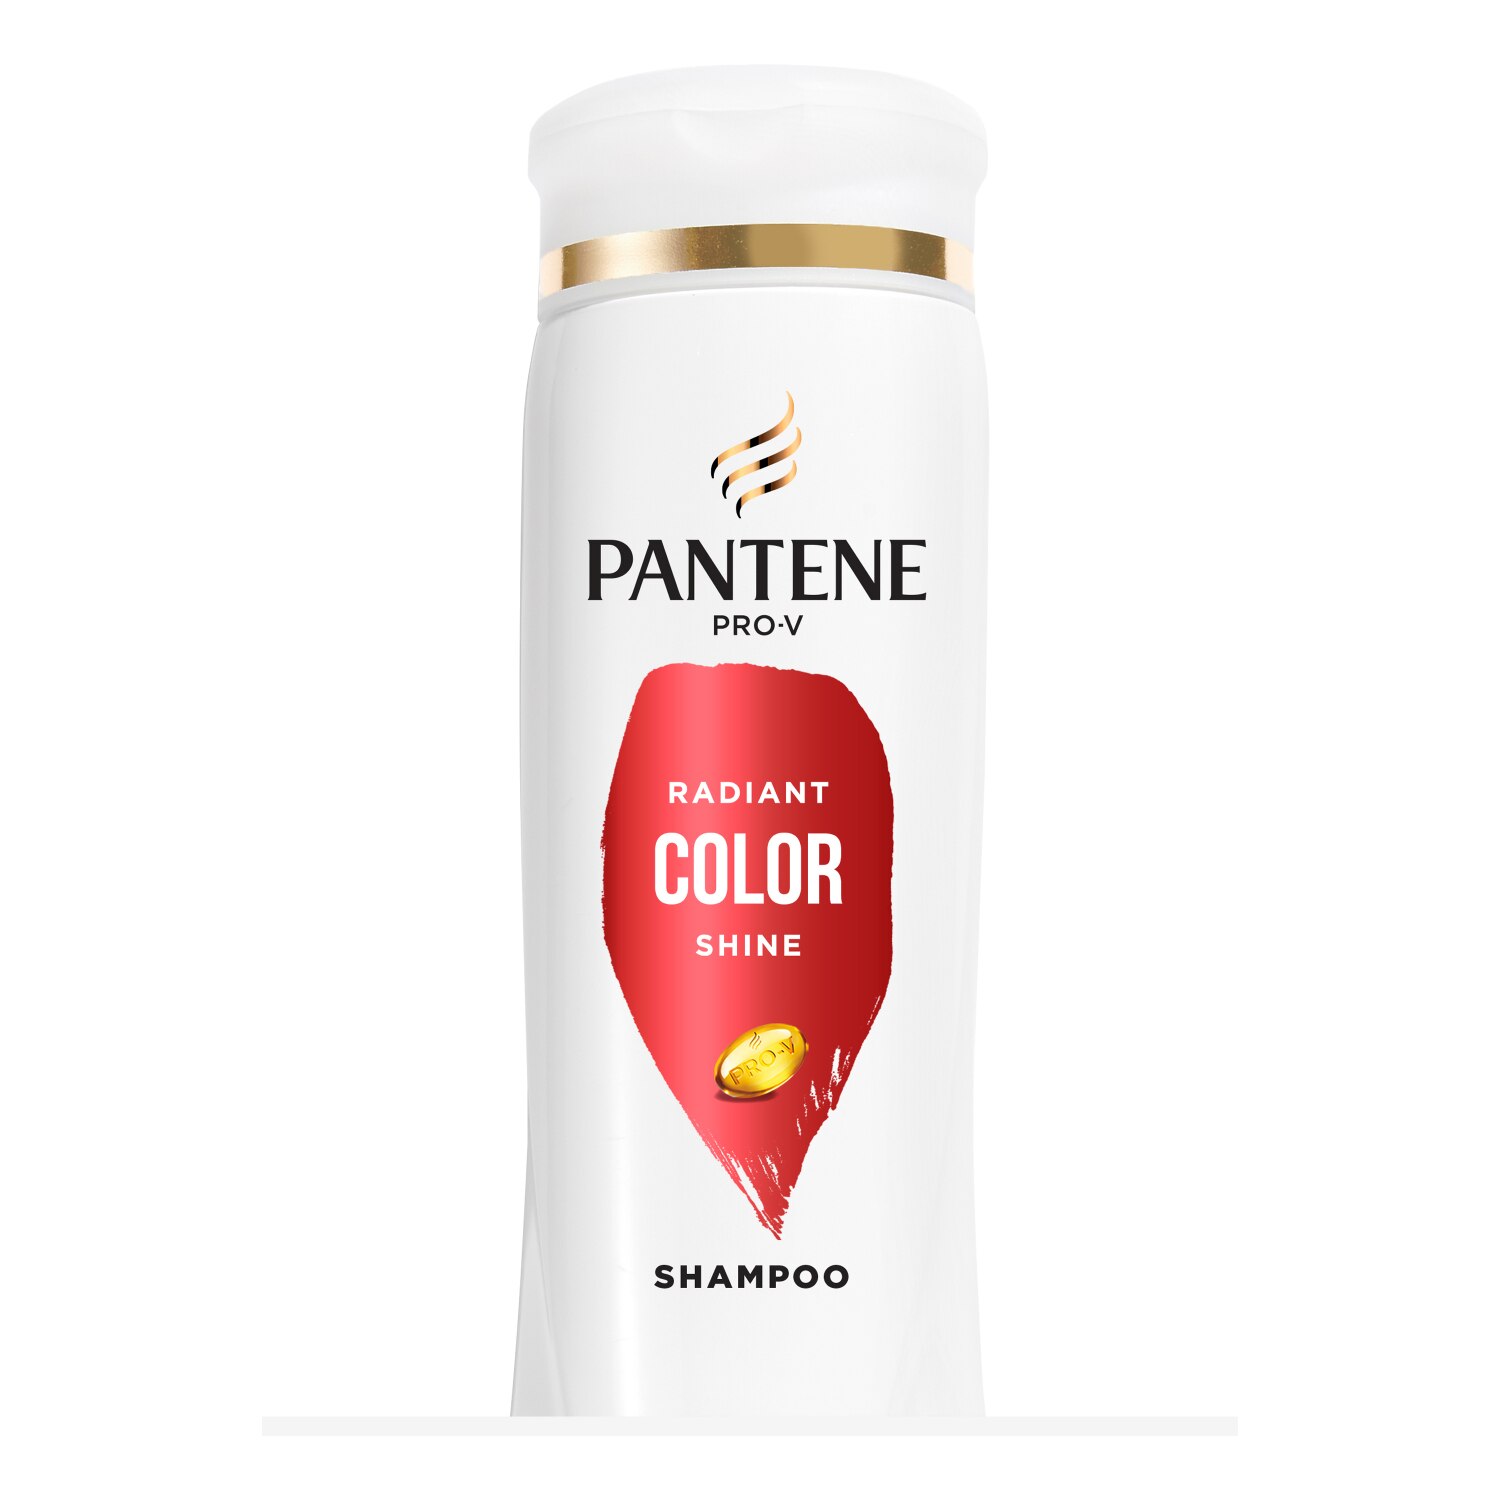 Pantene Pro-V Radiant Color Shine Shampoo, 12 OZ